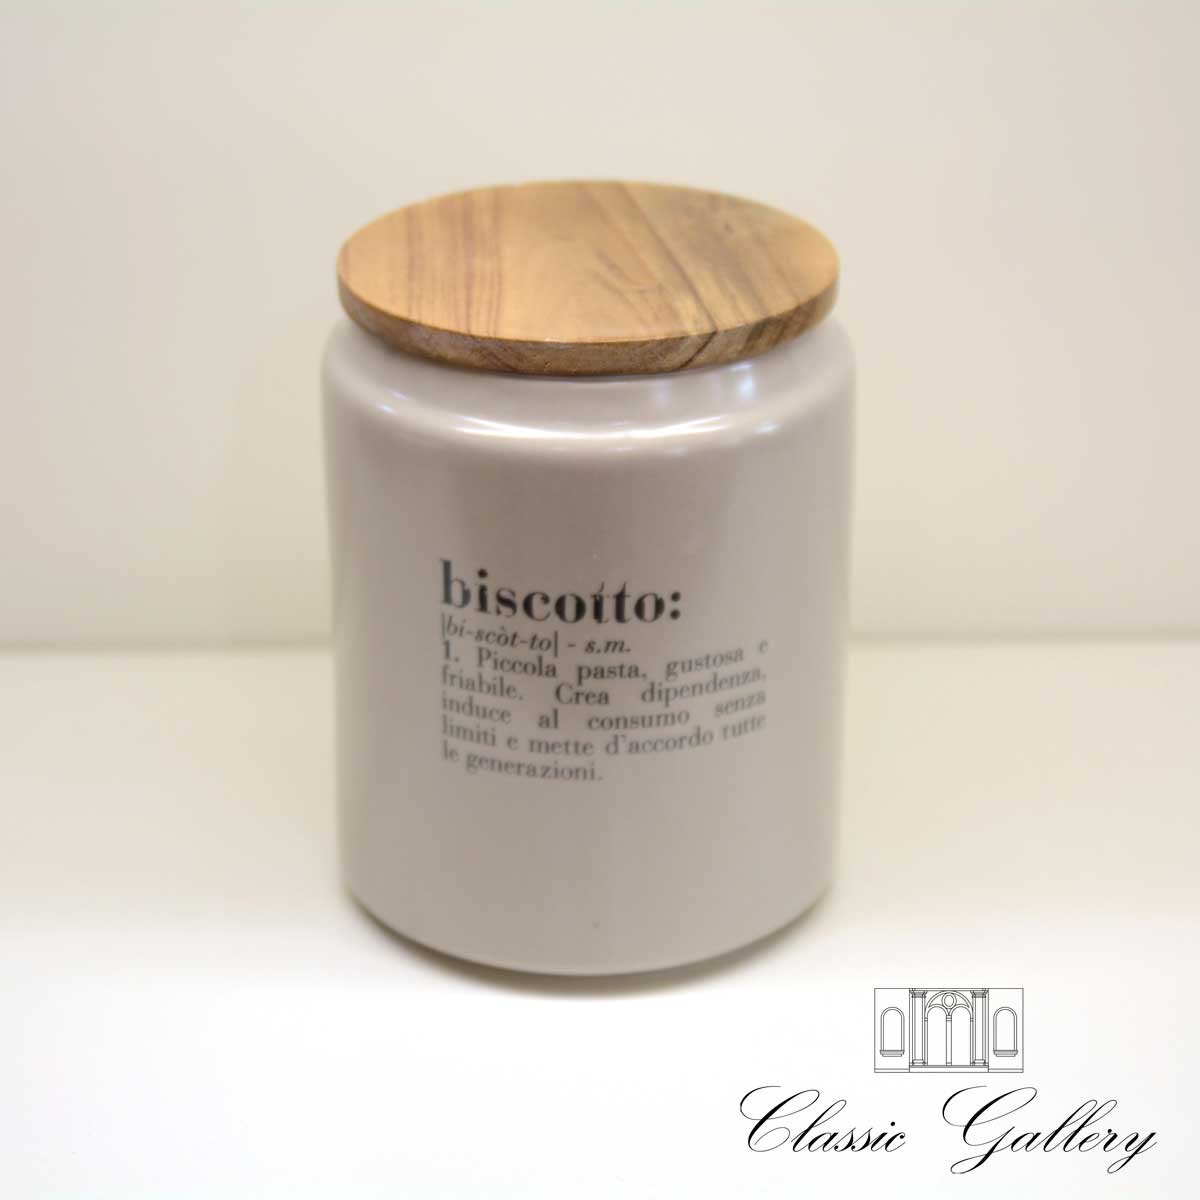 Biscottiera - Classic Gallery